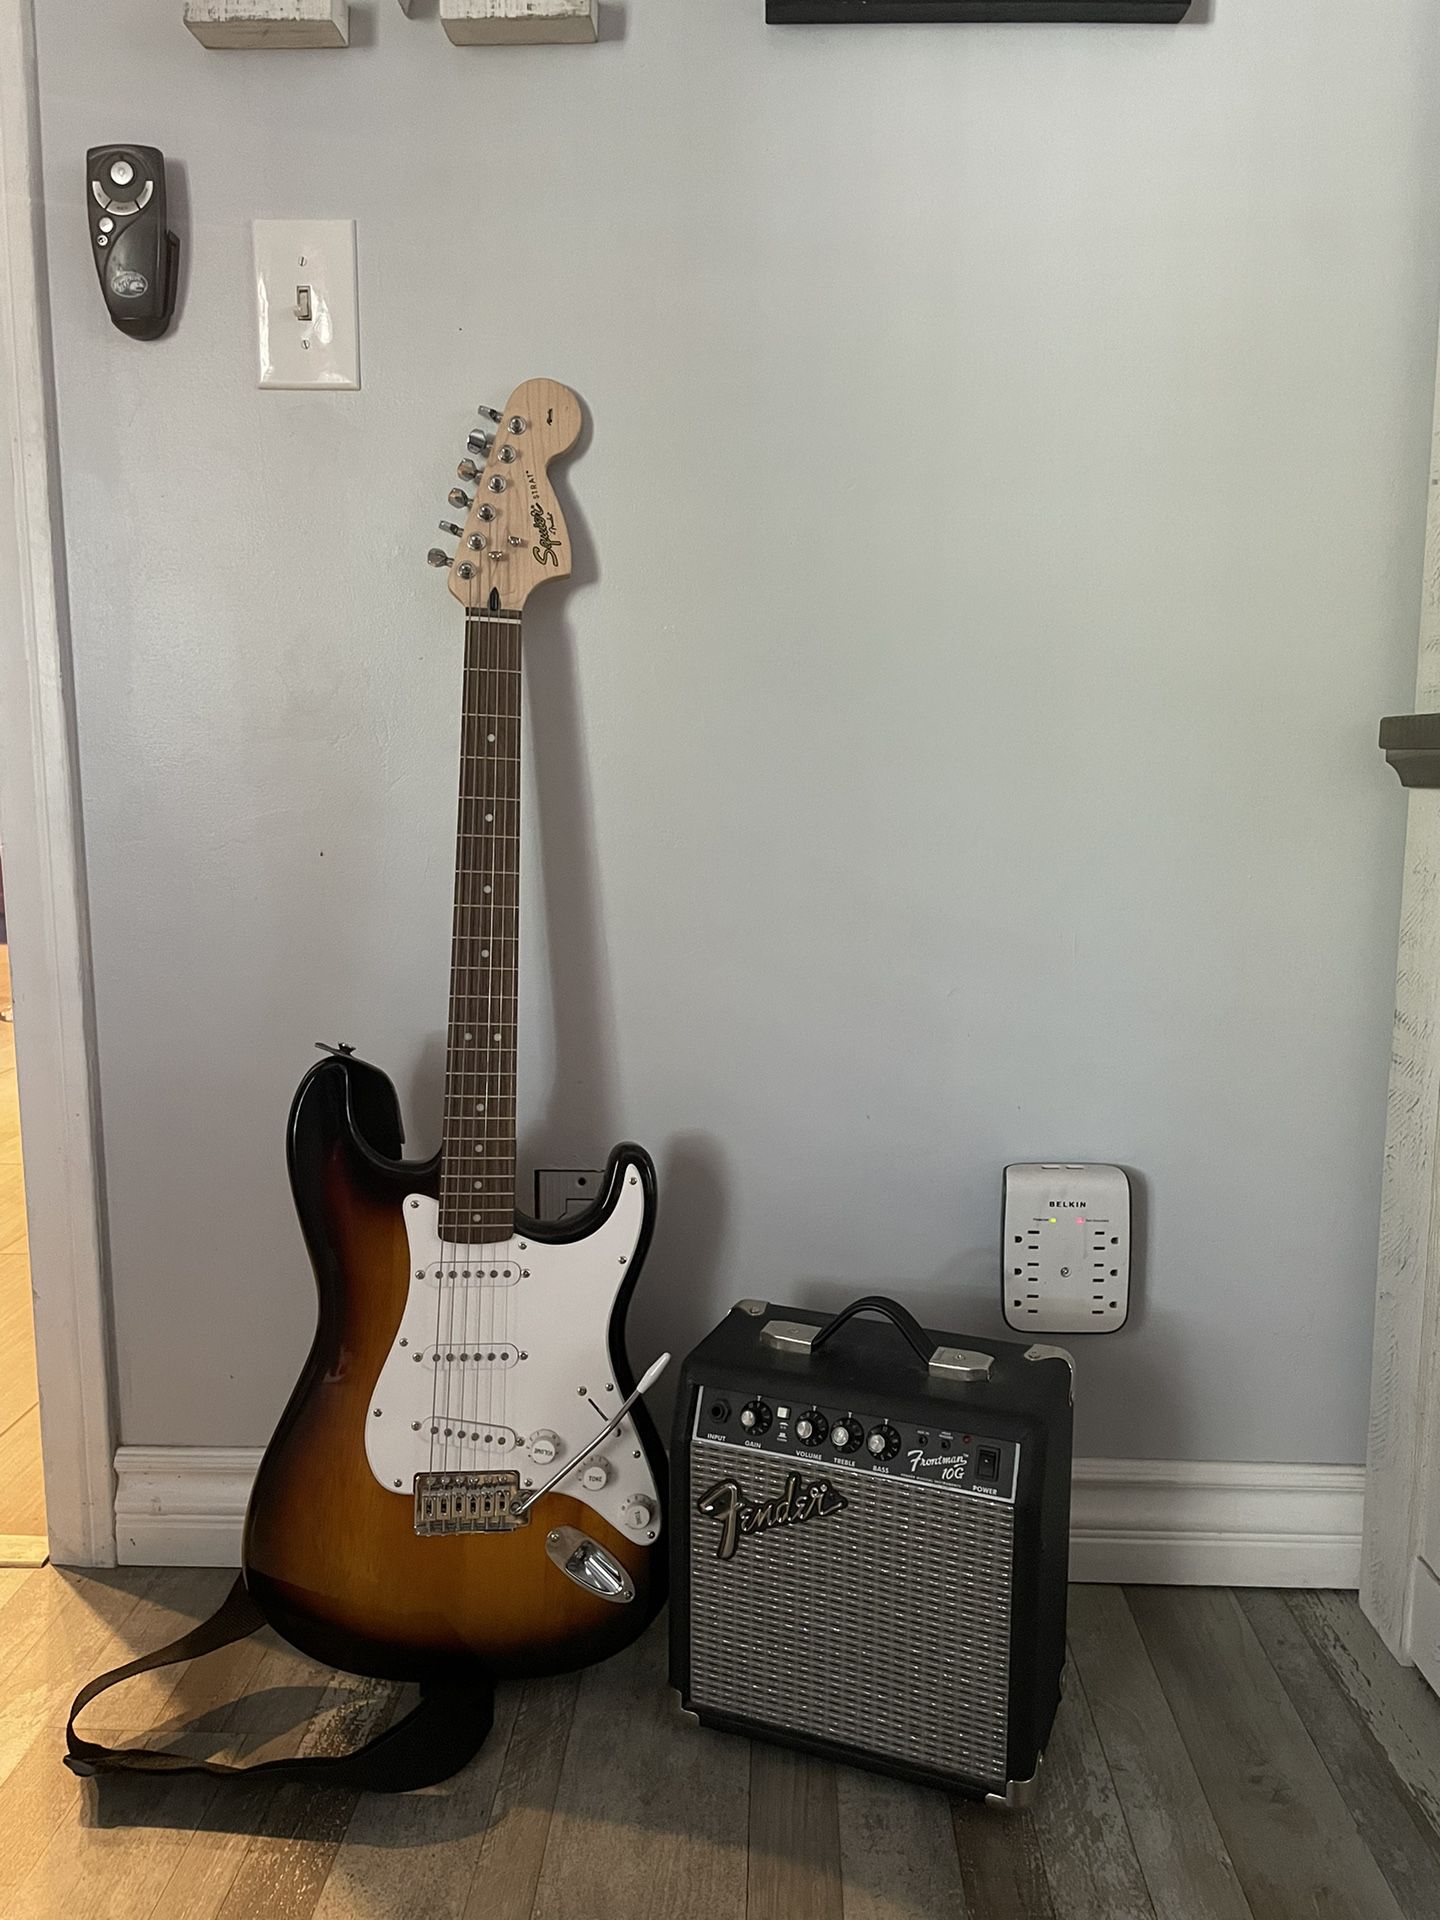 squire strat beginner guitar setup